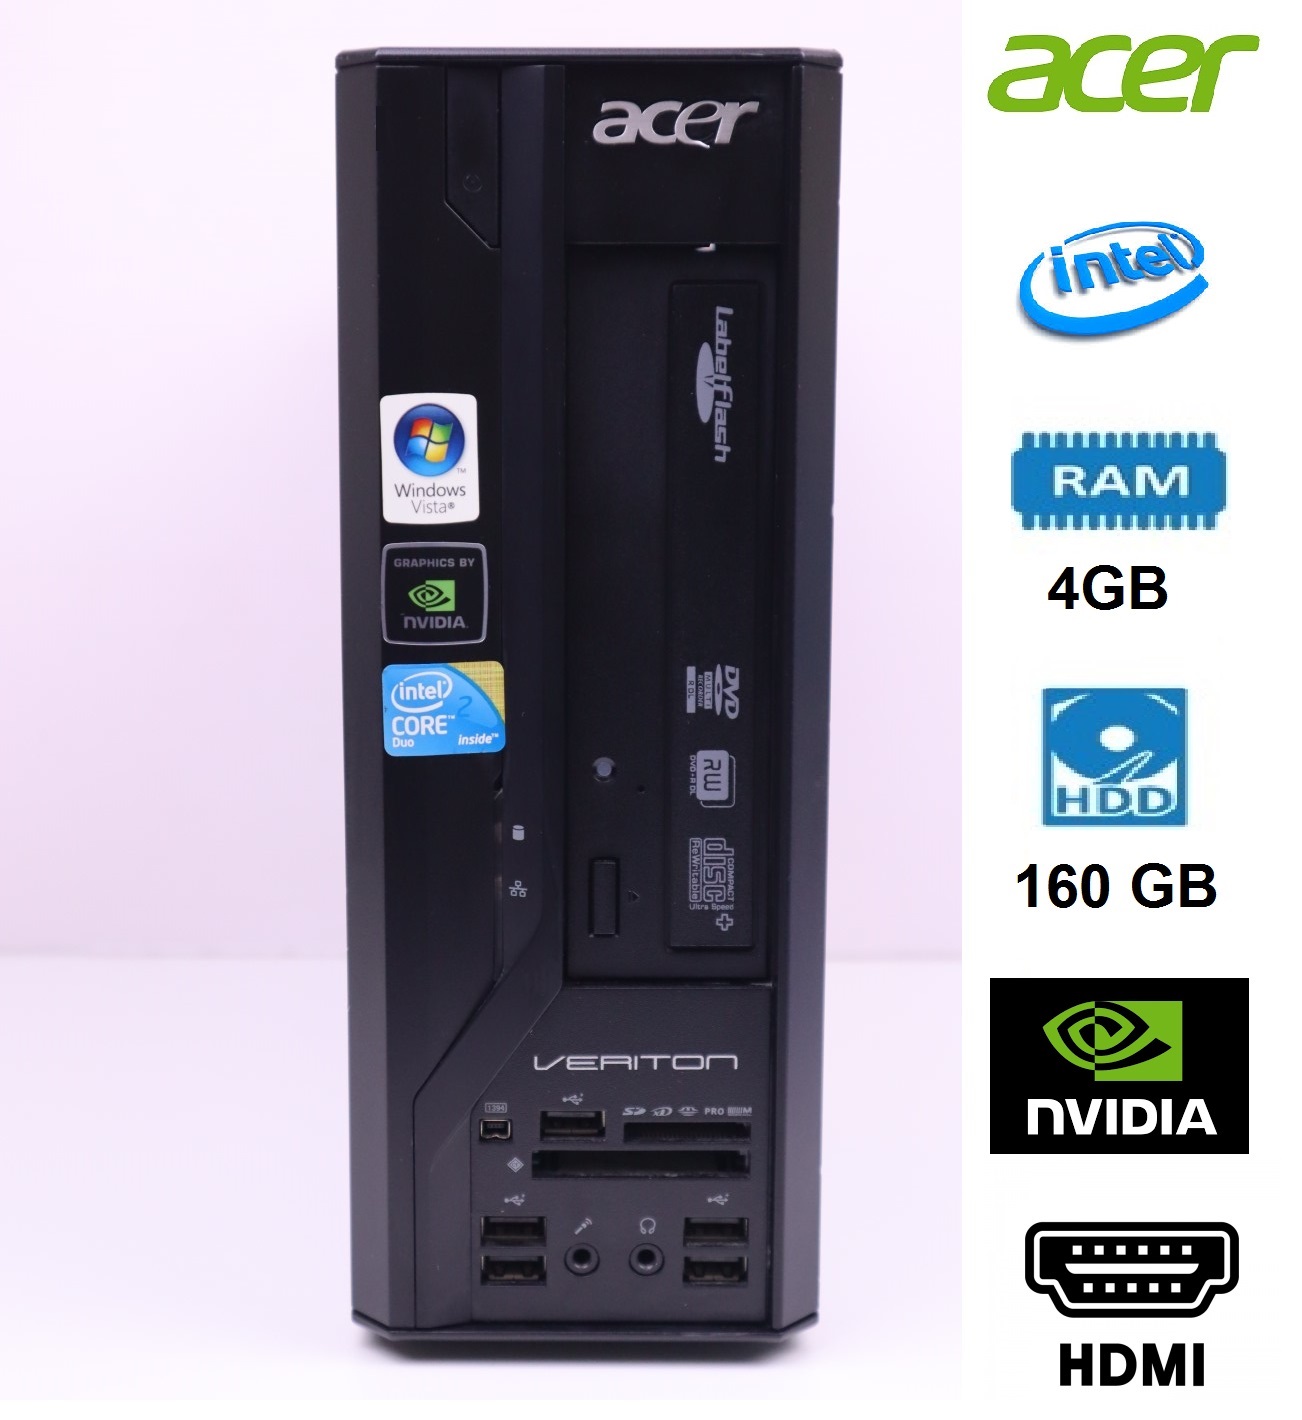 Acer Veriton X270 Intel CPU -RAM 4GB -HDD 160GB  -HDMI PORT -Chipset Type: NVIDIA GeForce